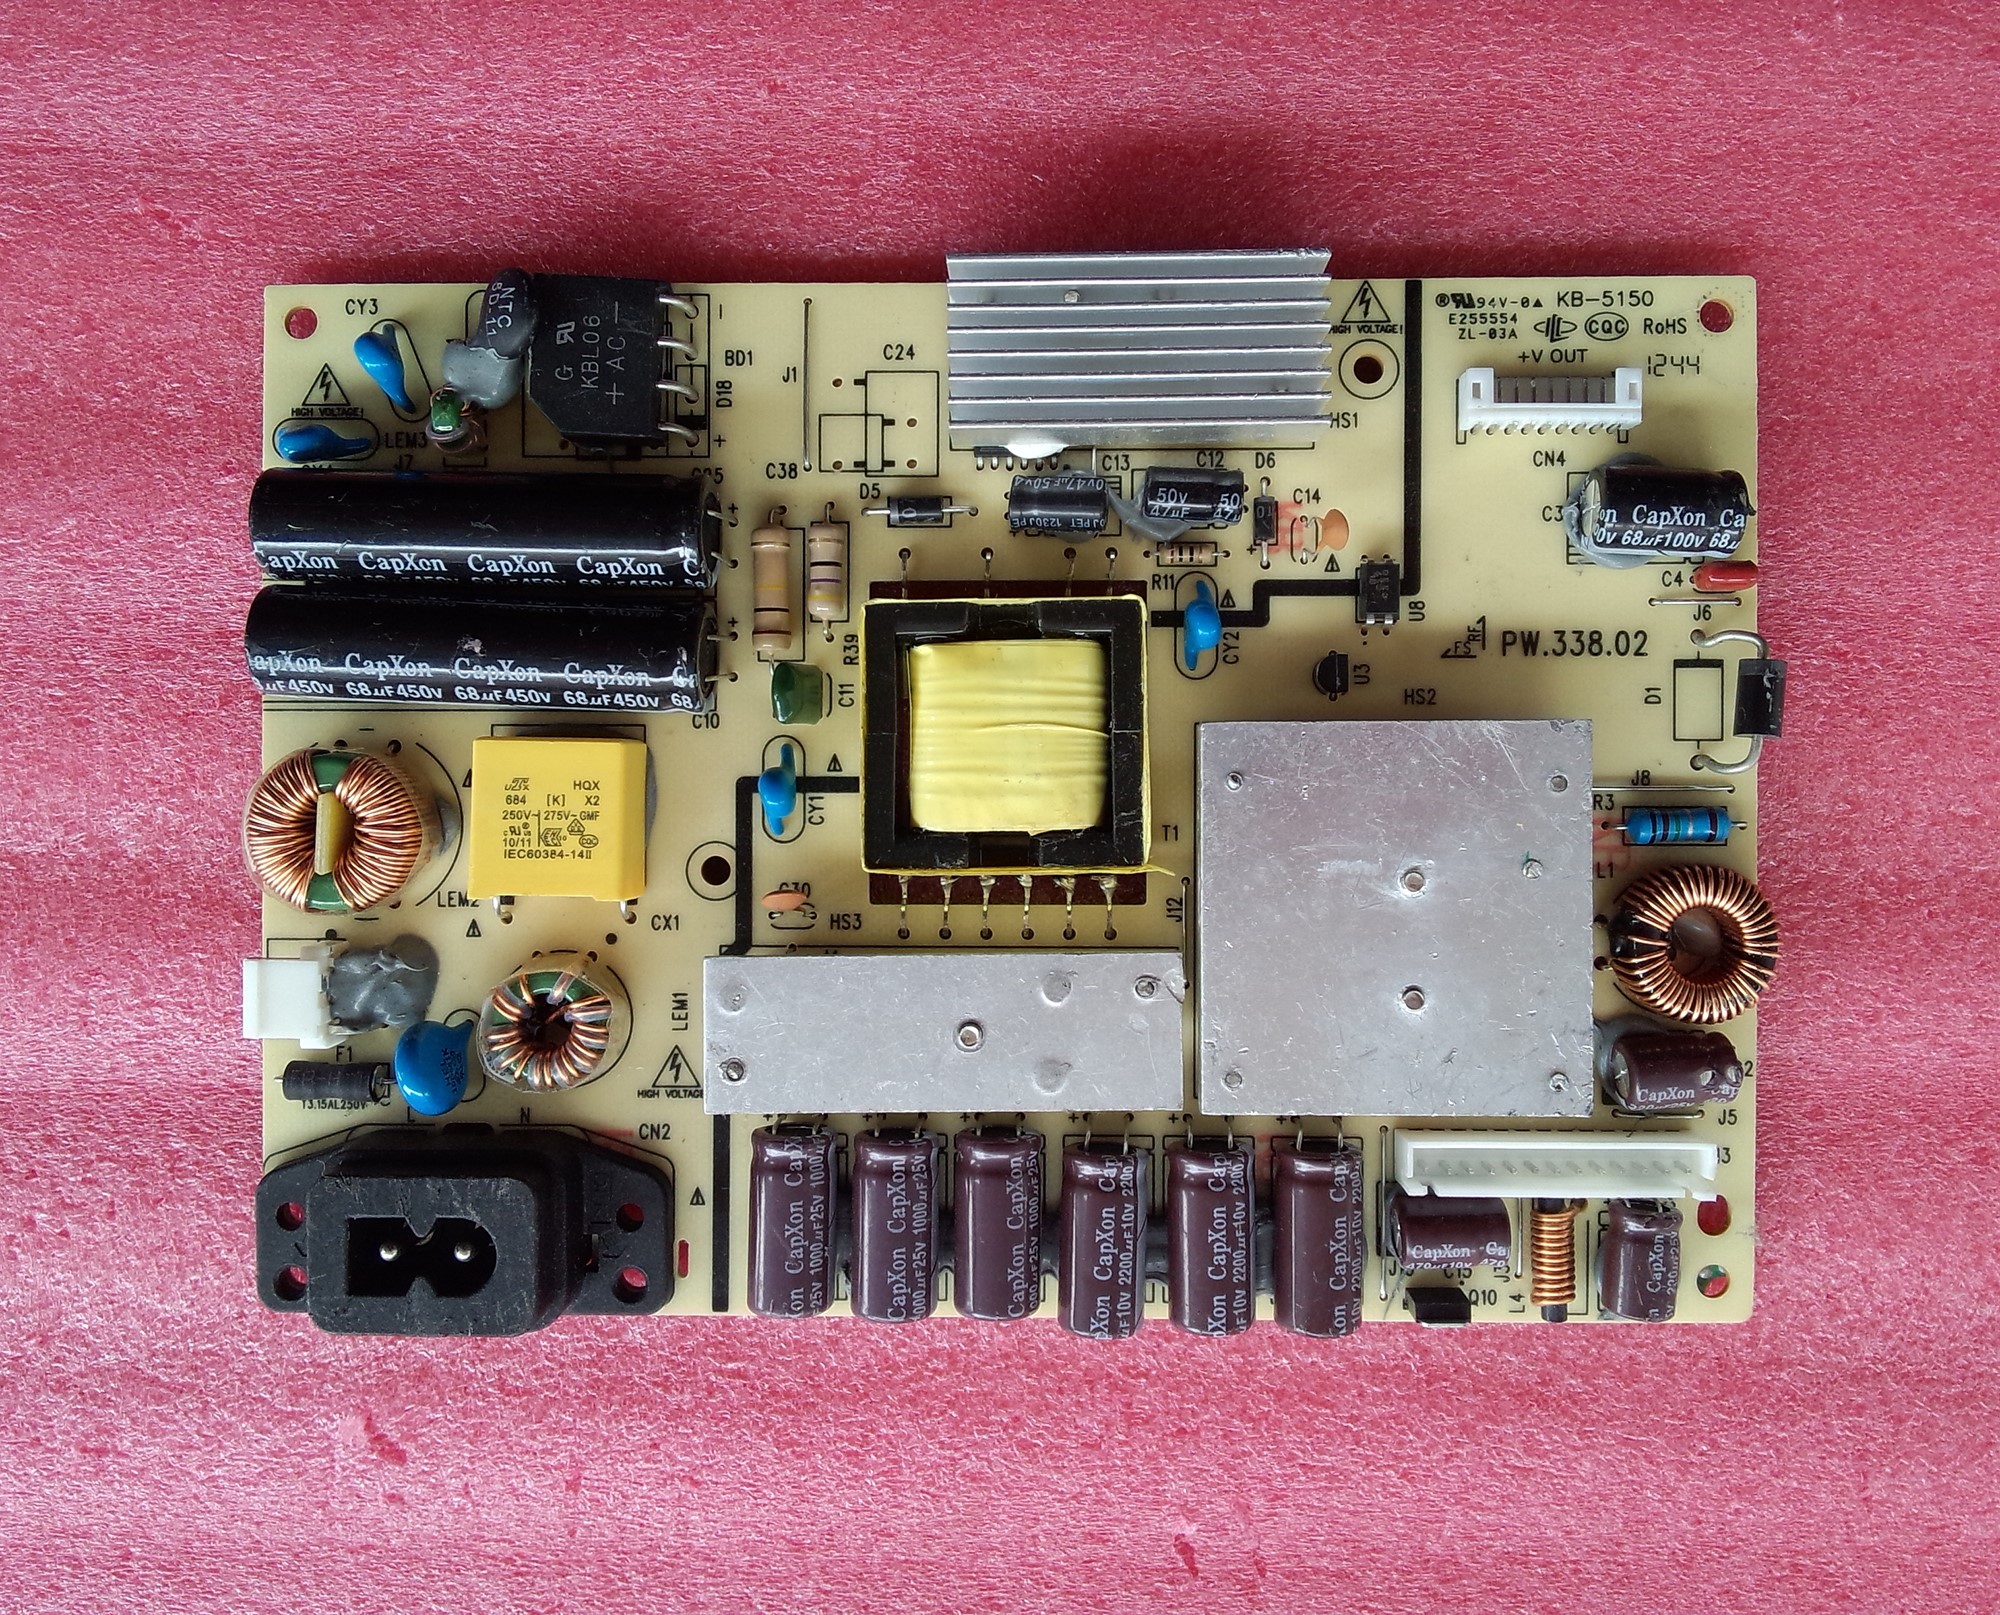 KB-5150 PW.338.02 power supply board